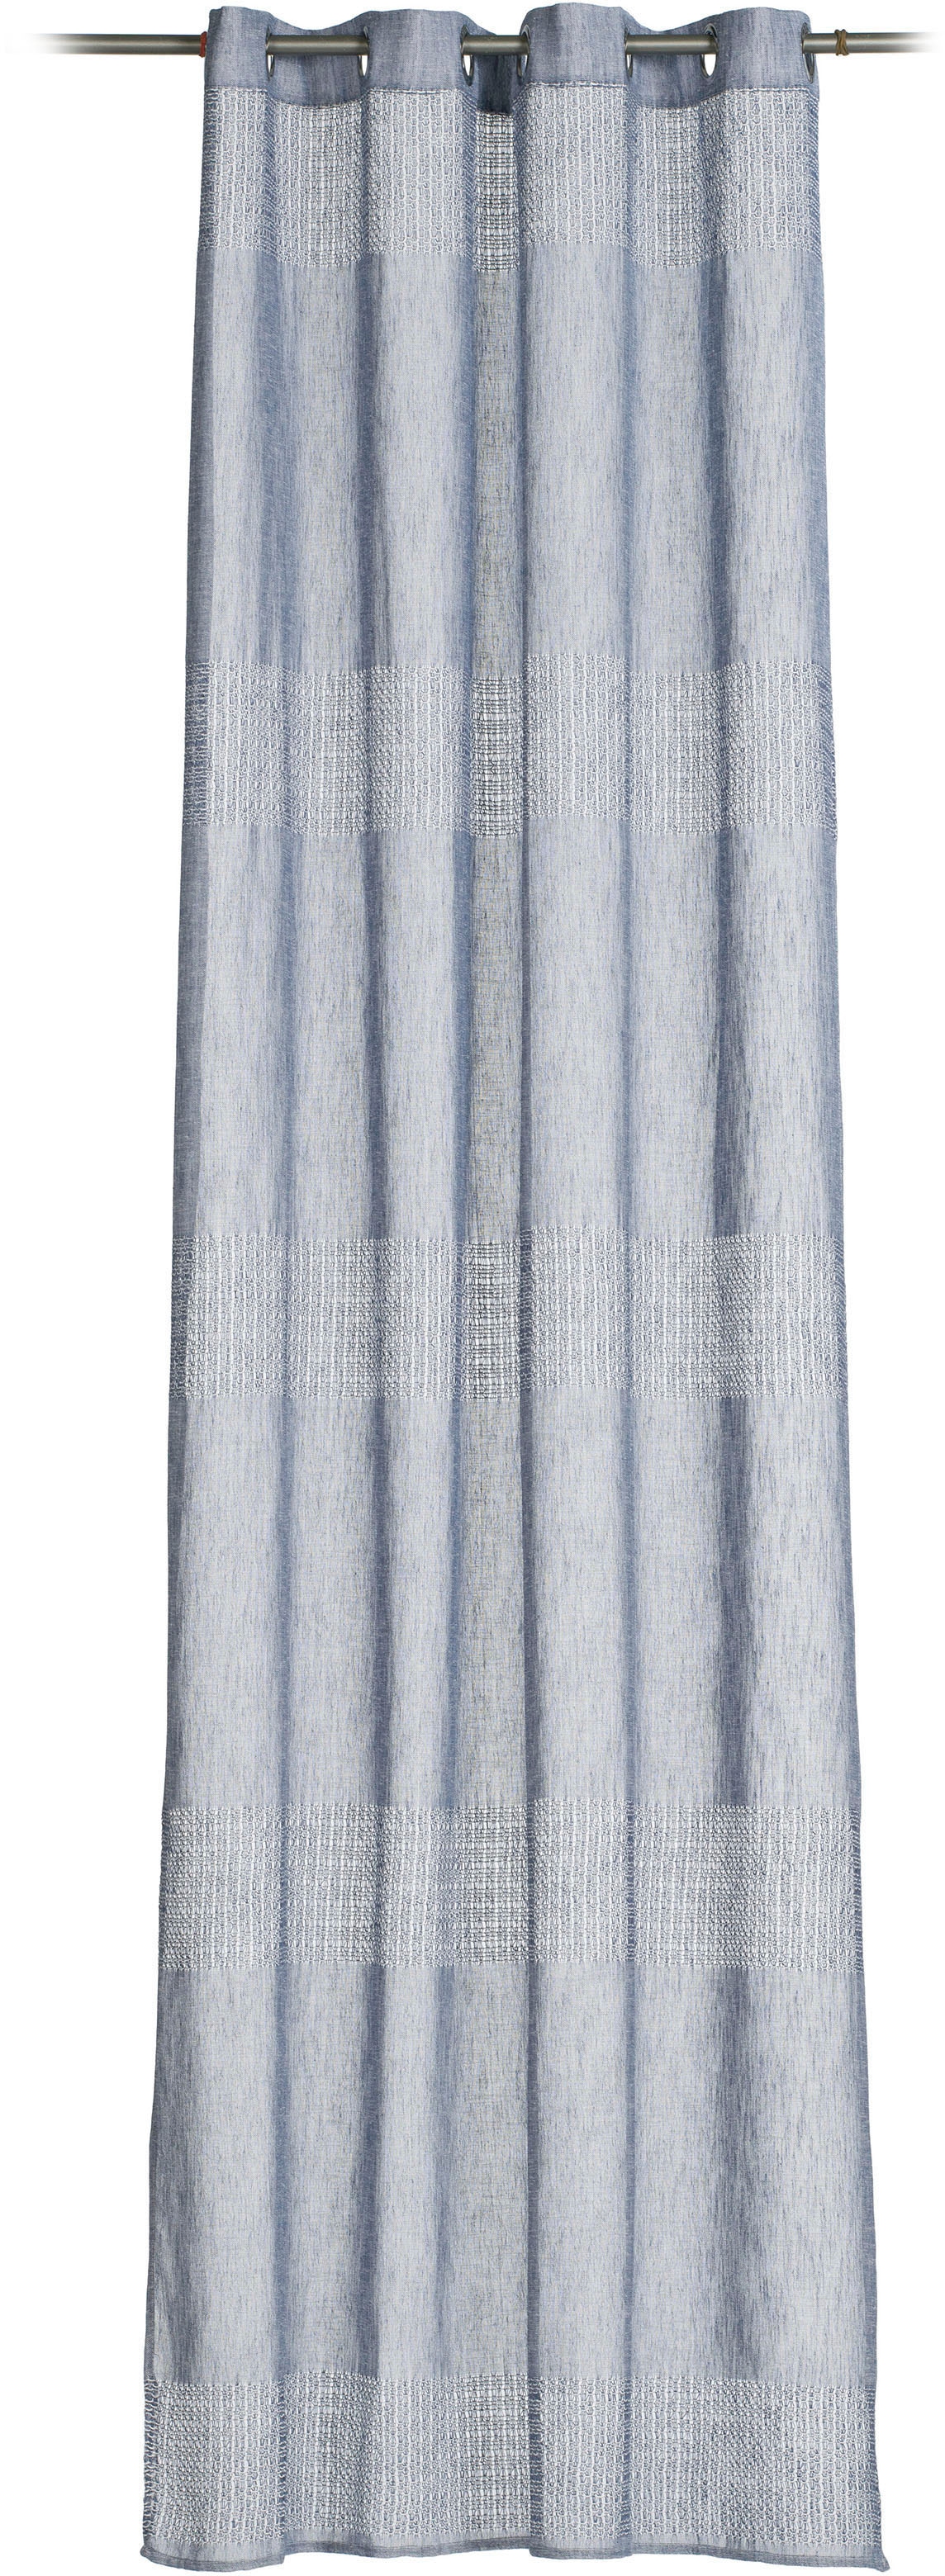 Gözze Vorhang »Marrakesch - Ösenschal«, (1 St.), HxB: 245x140,  transparentes Gewebe inkl. Querstreifen auf Rechnung | BAUR